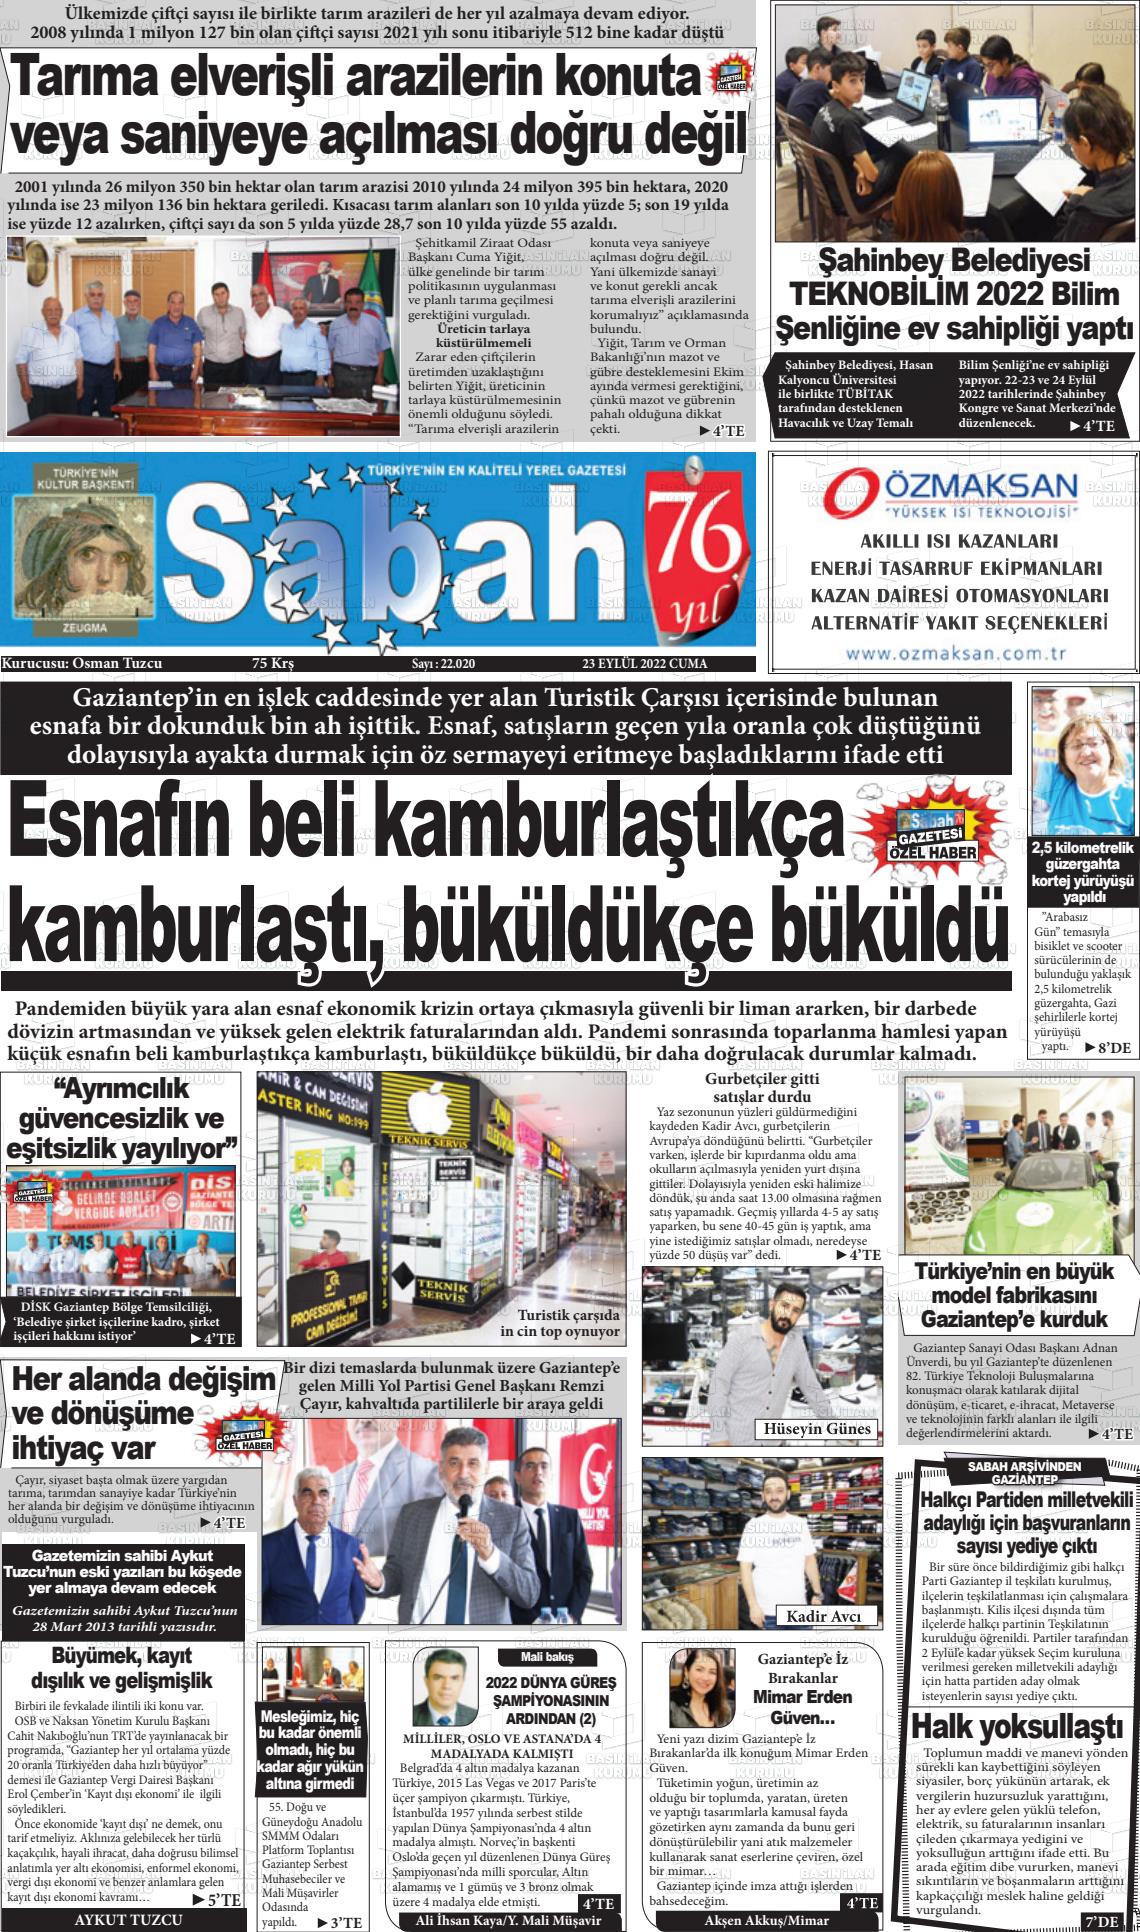 23 Eylül 2022 Gaziantep Sabah Gazete Manşeti